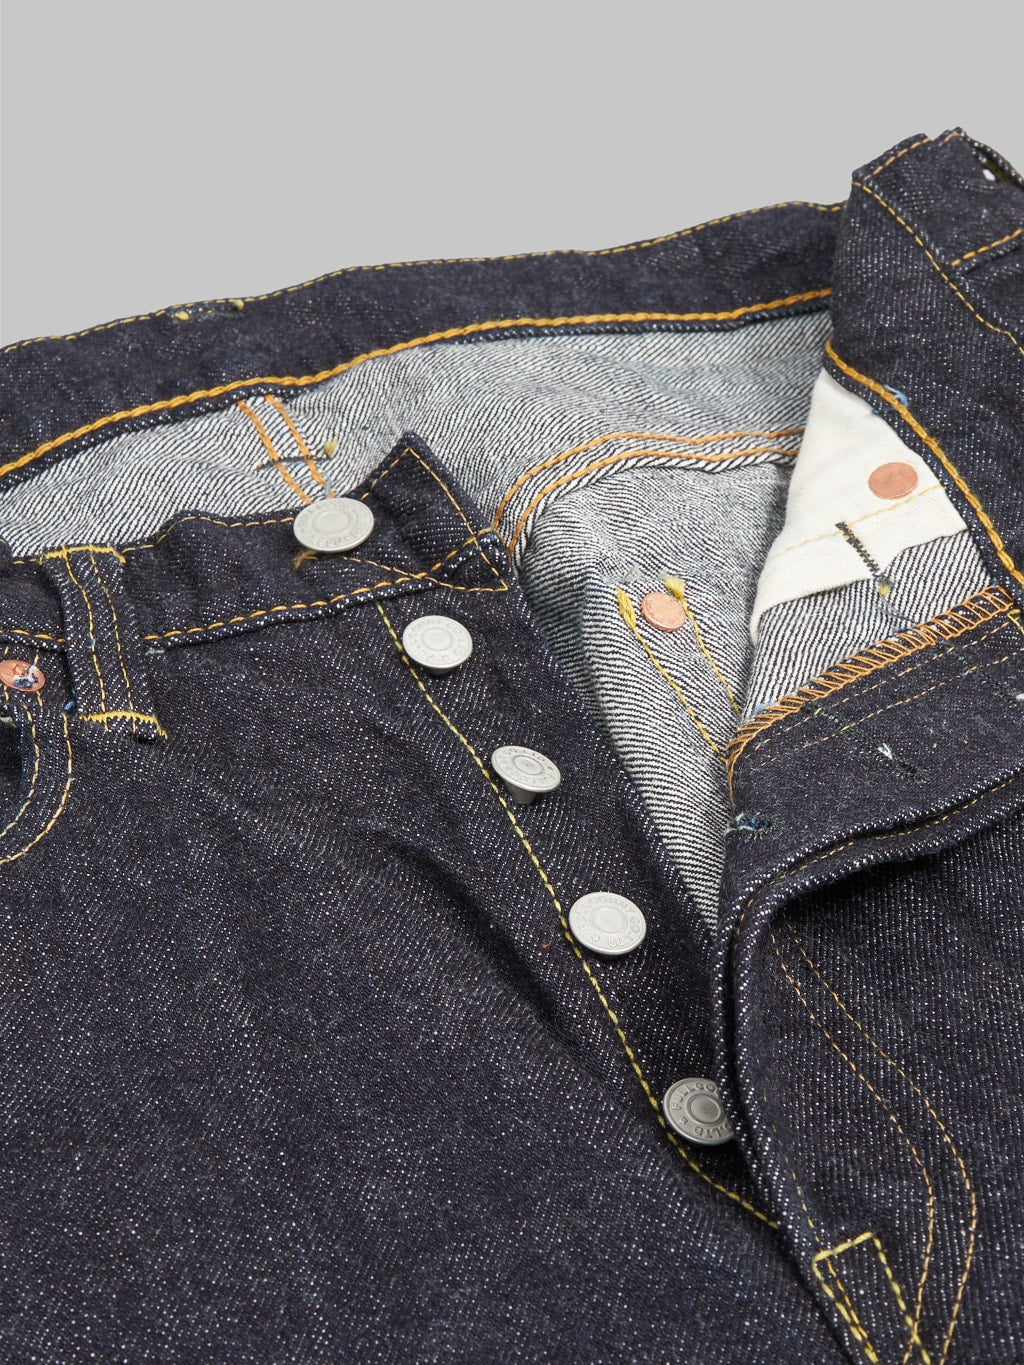 Fullcount 1101XXW regular Straight selvedge Jeans metal buttons